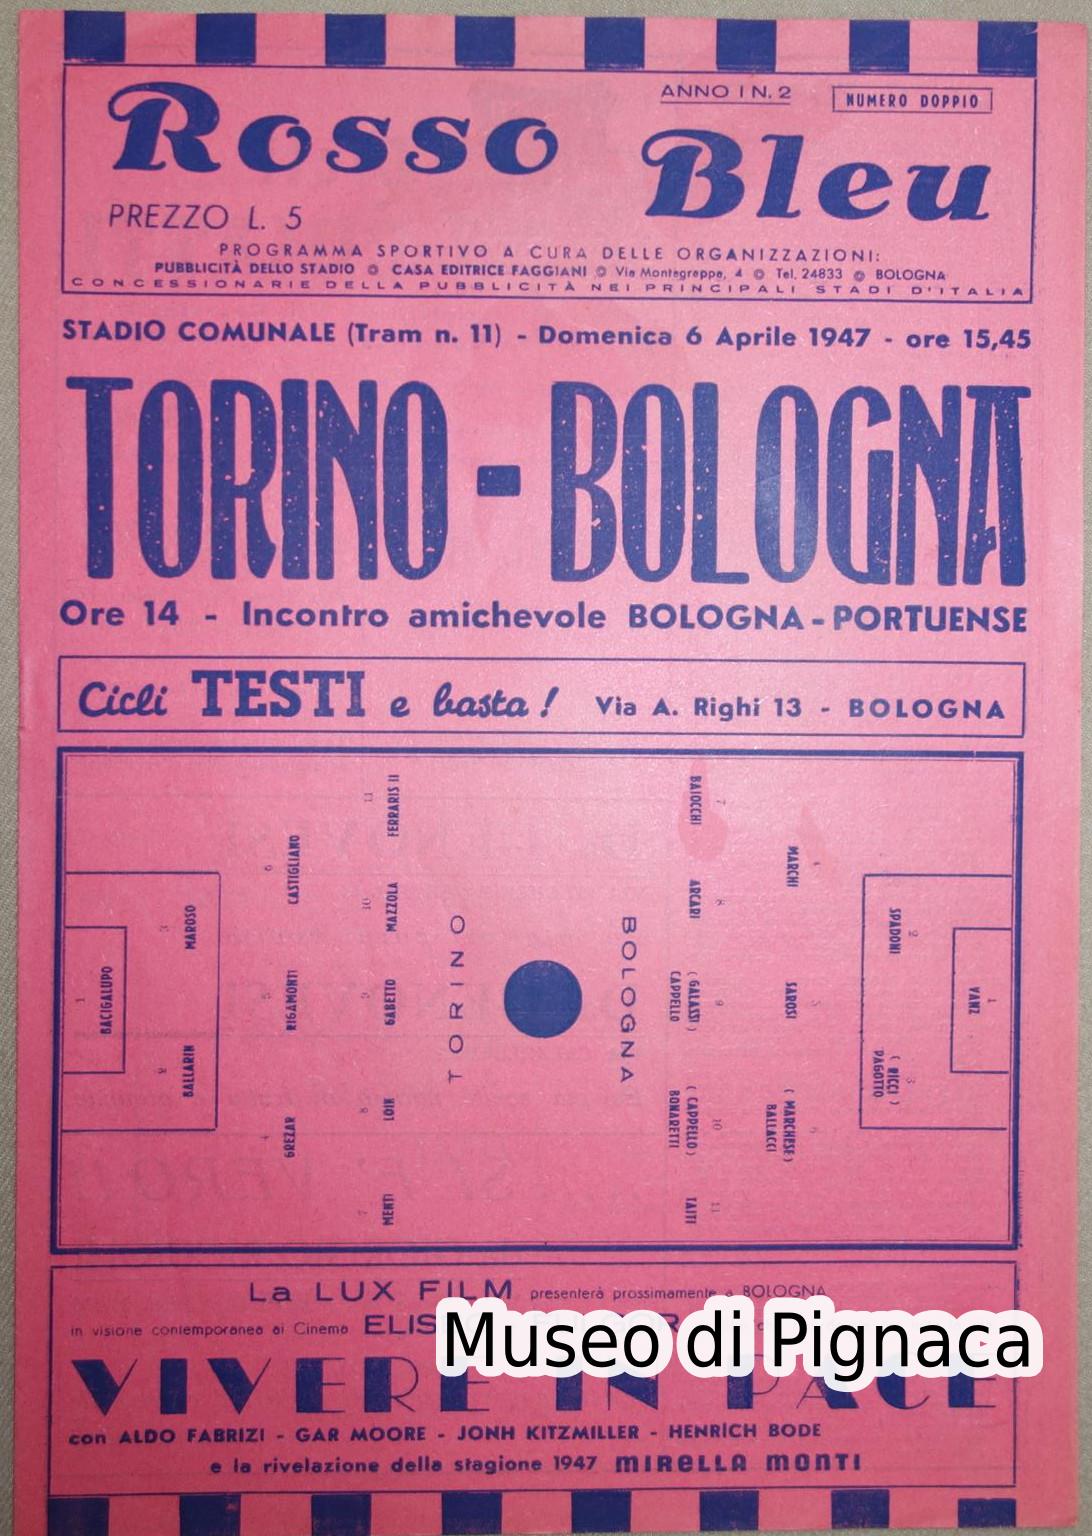 1946/47 Programma Manifesto 'Rosso Bleu' partita Grande Torino vs BOLOGNA FC